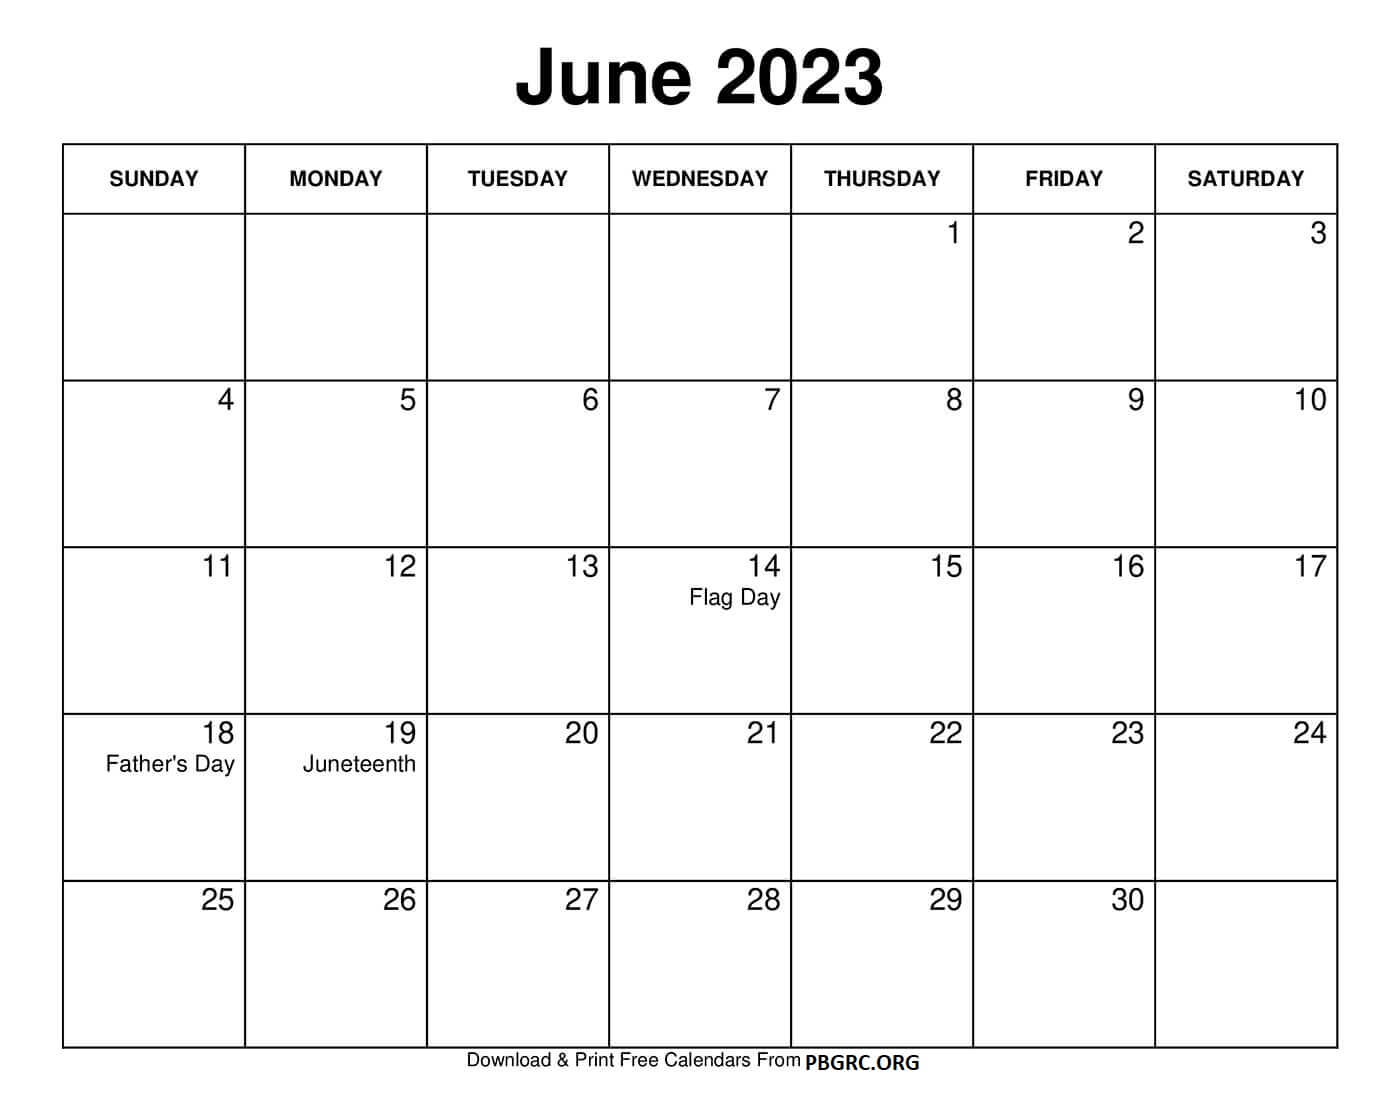 June 2023 Calendar Printable with Holidays